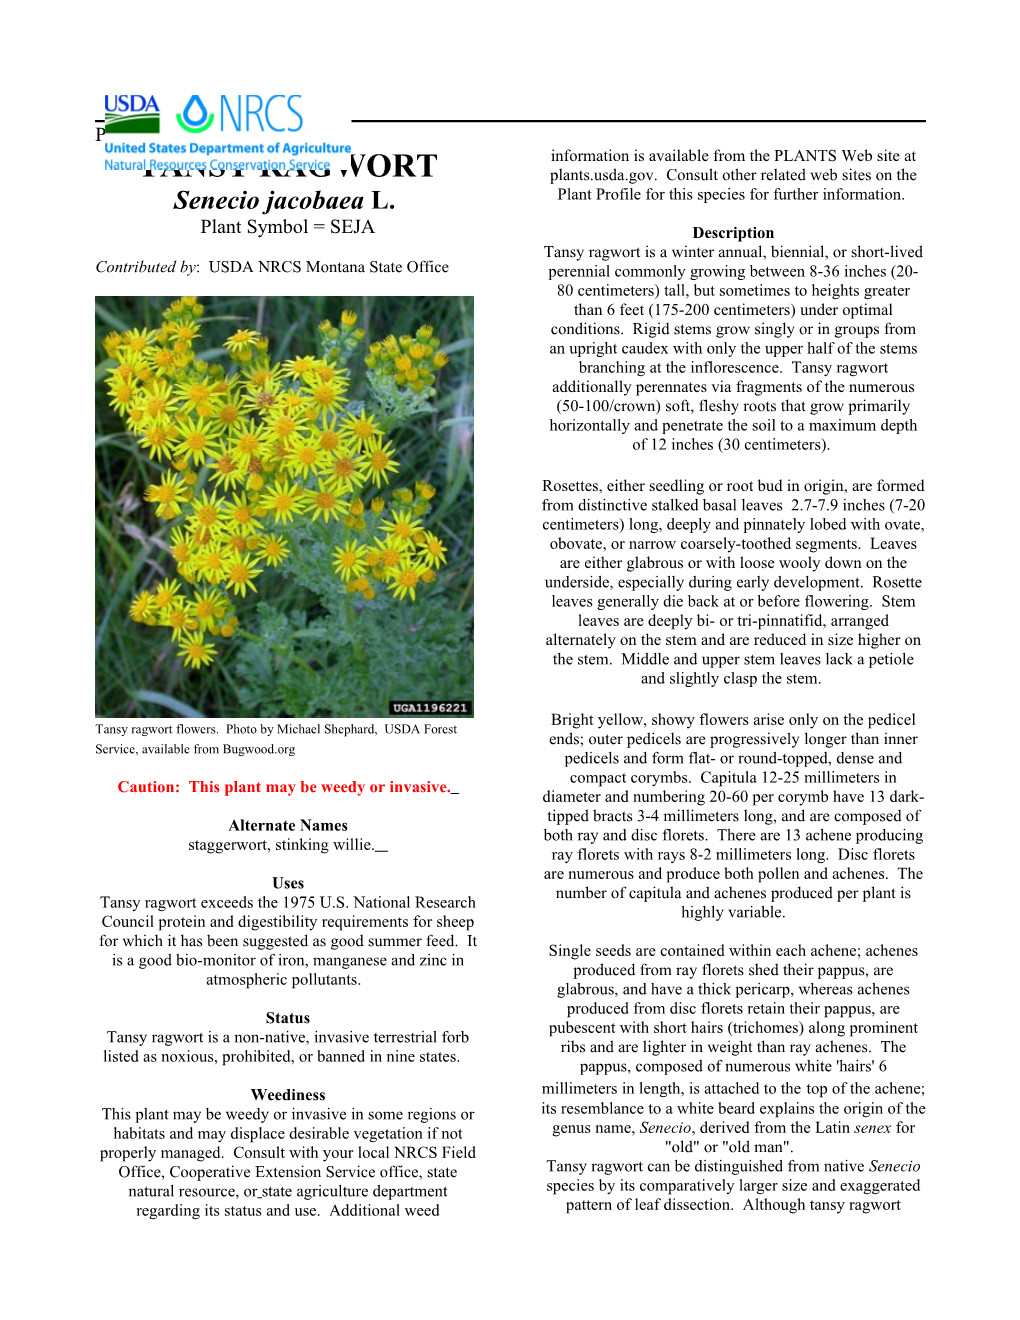 Tansy Ragwort Plant Guide